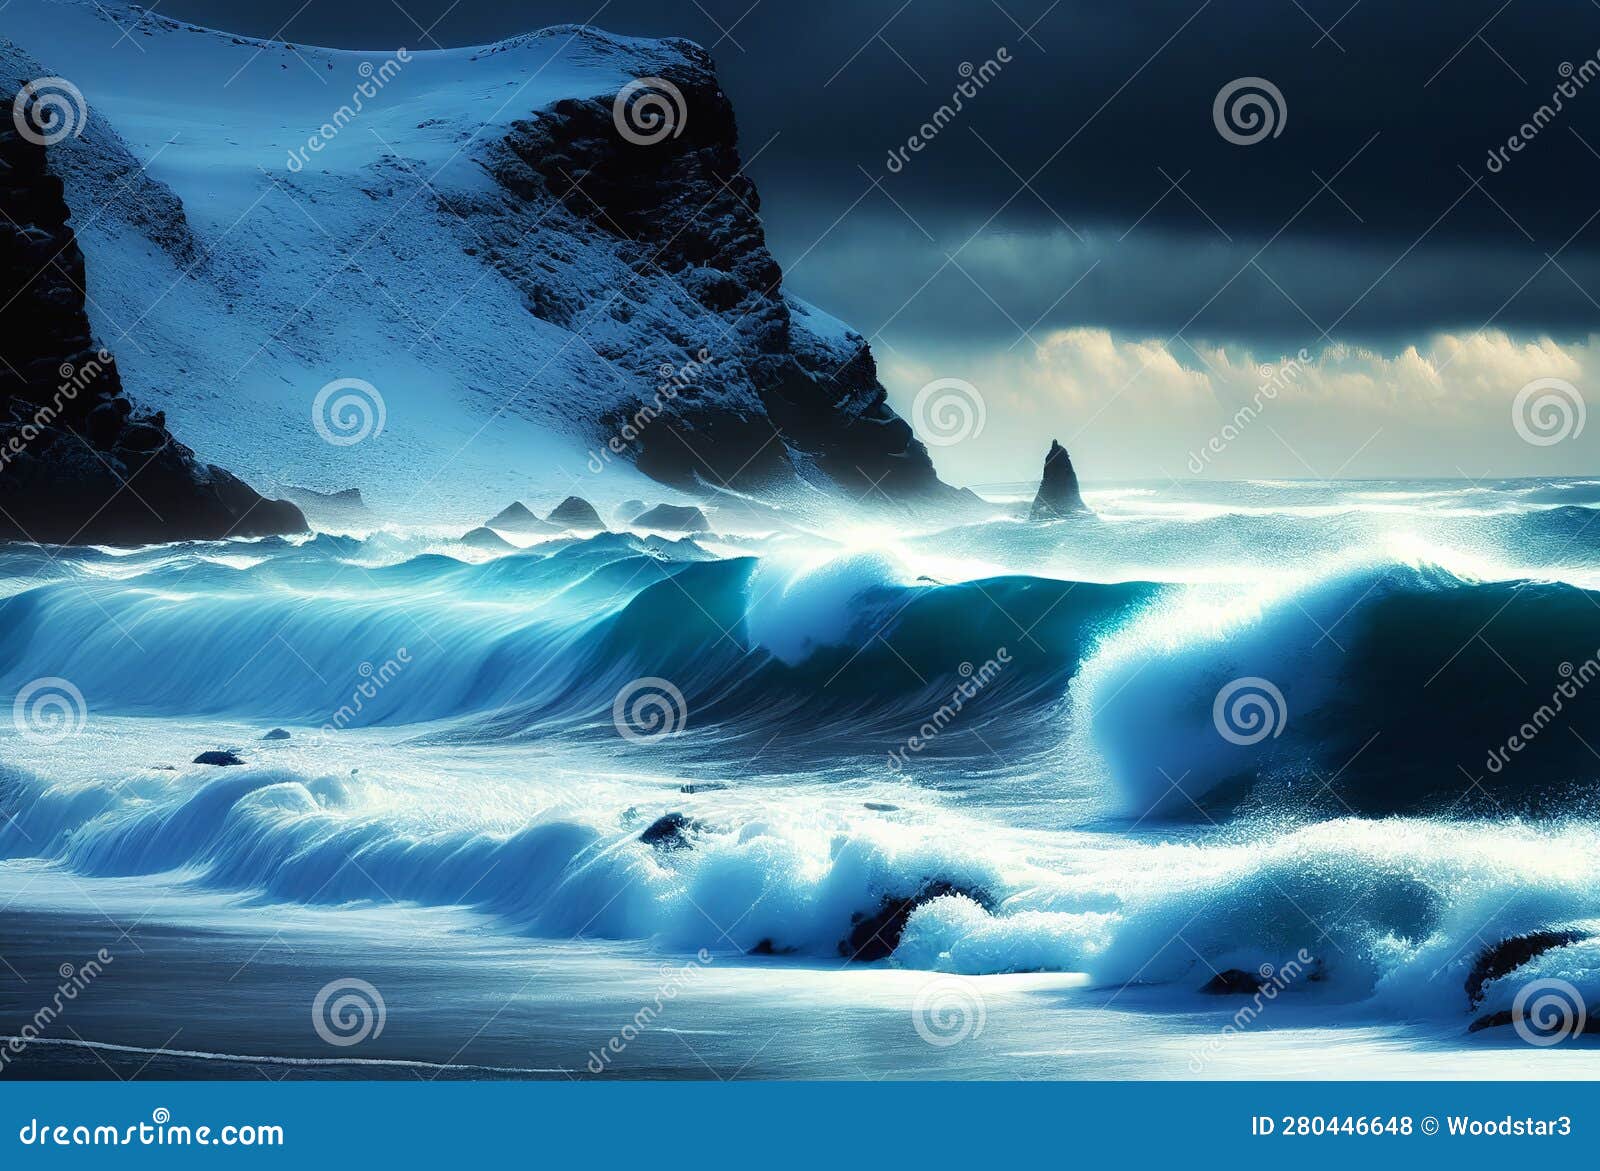 storm on the ocean. beautiful landscape of islandia, norway